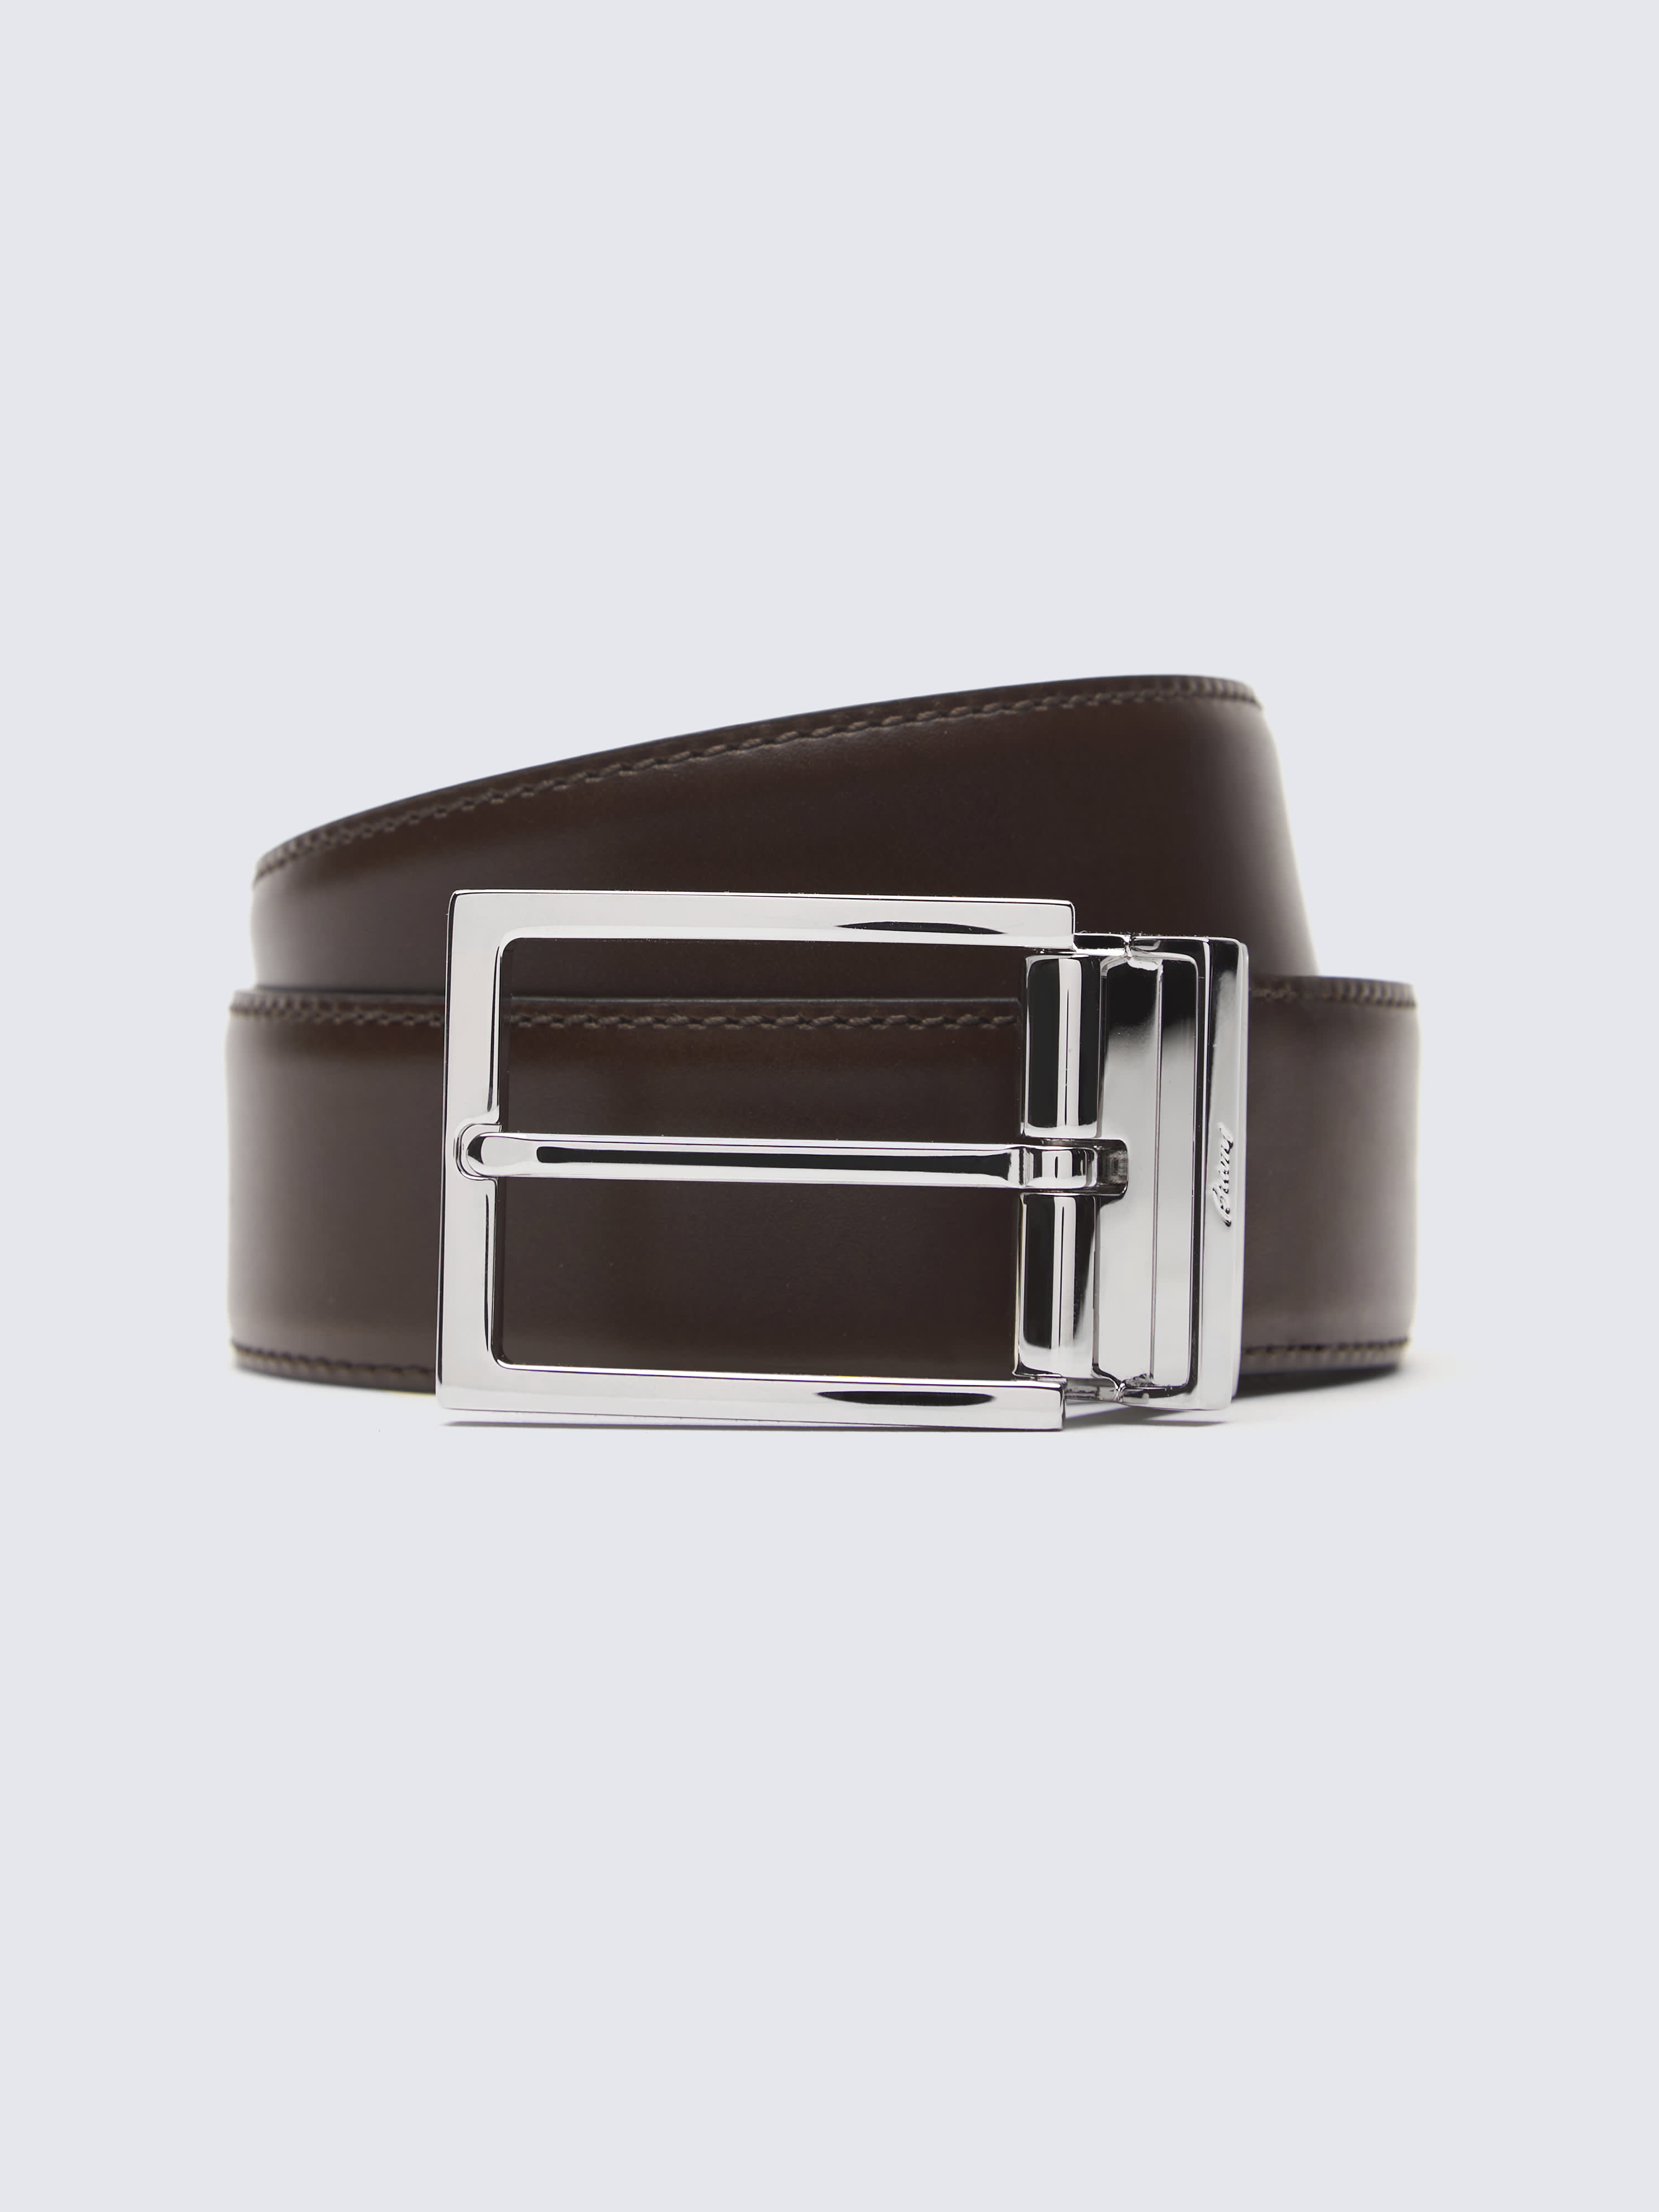 BRIO Curved Handmade Leather Tiny Rivet Belt